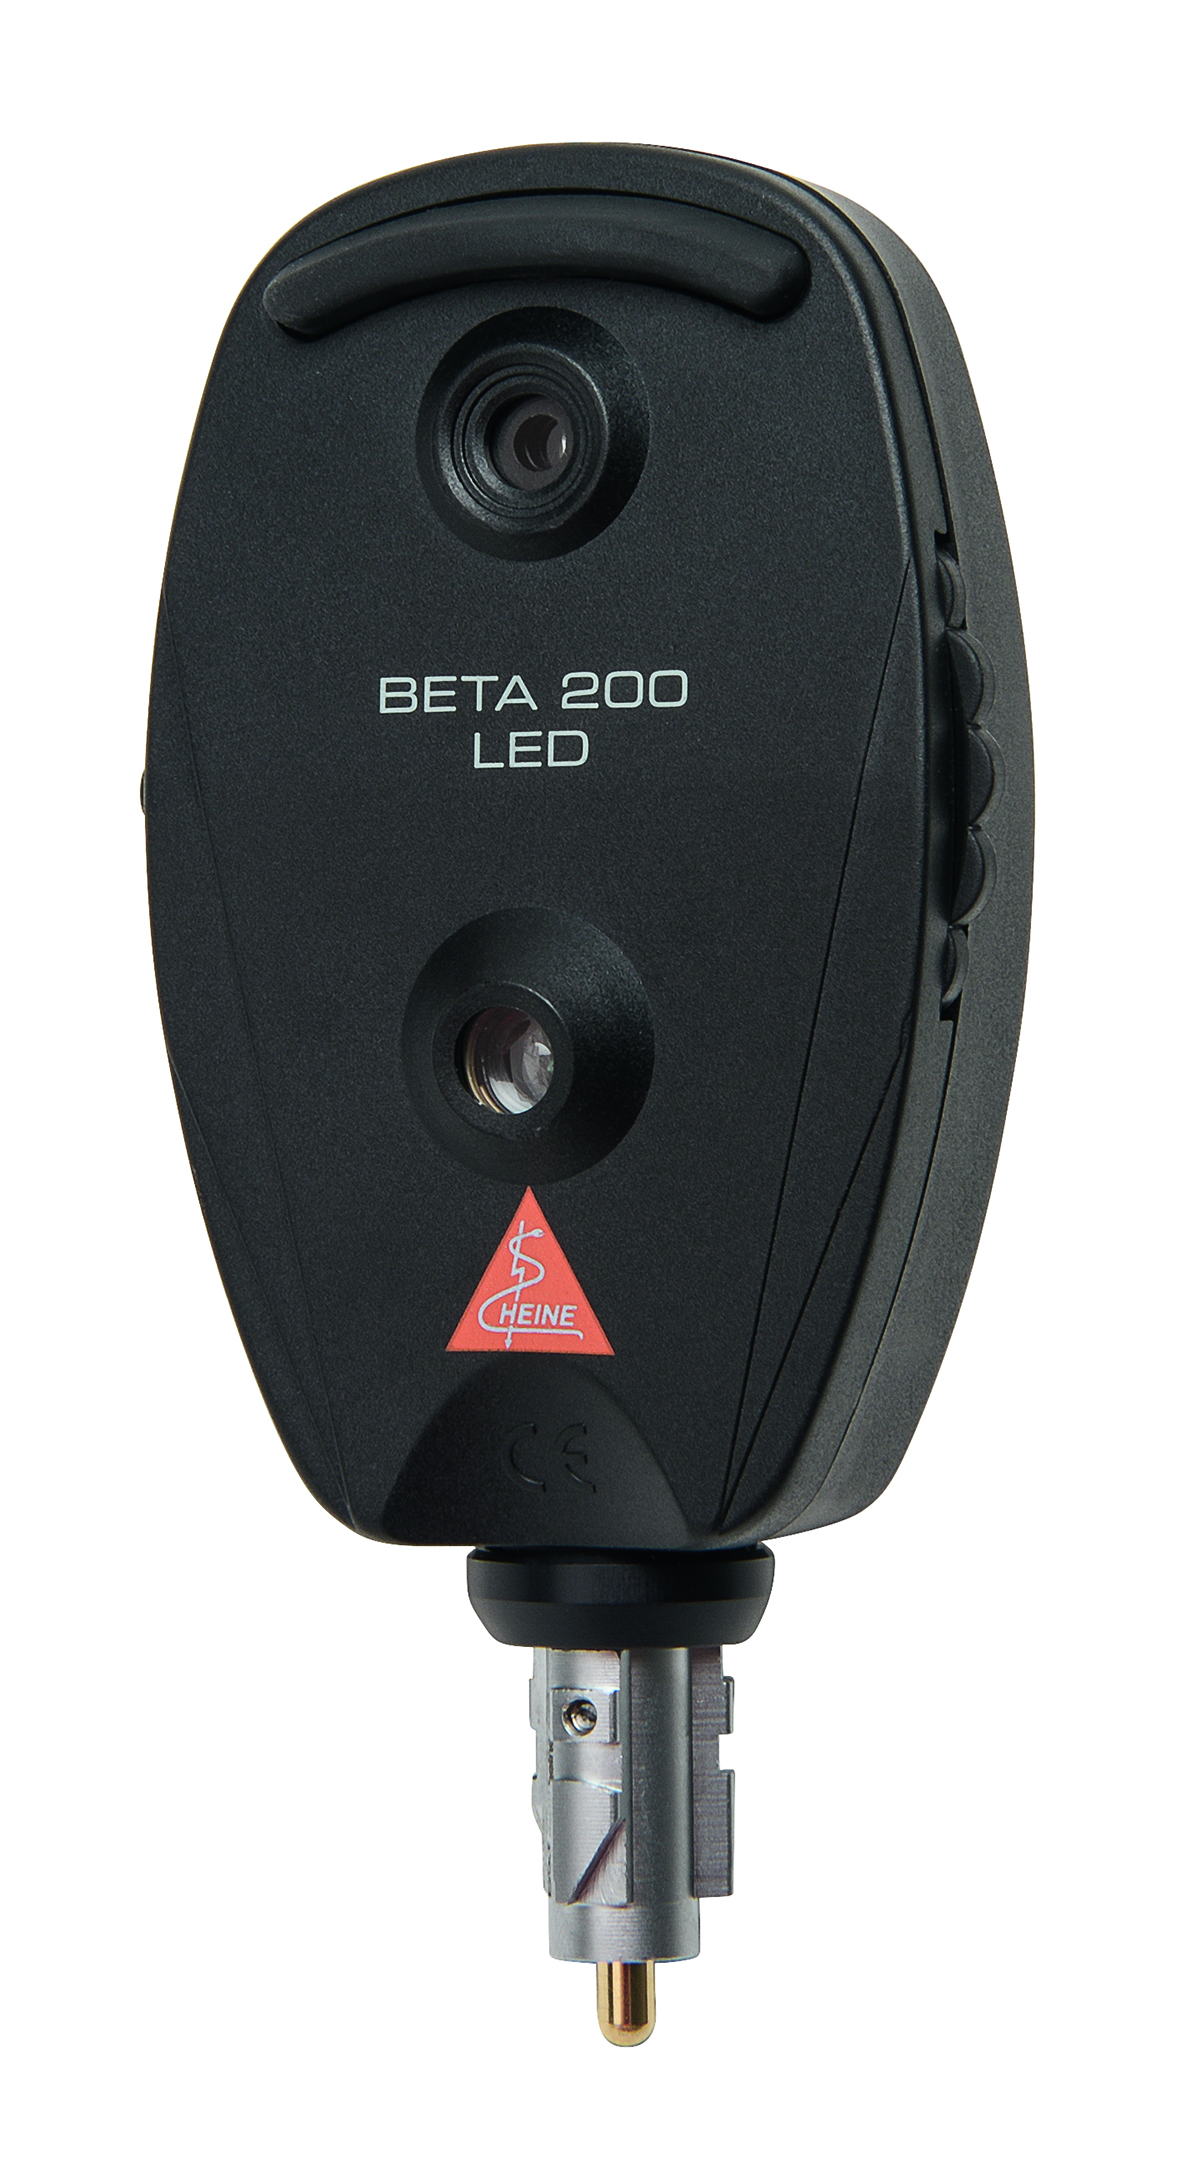 Heine Tête ophthalmoscope Beta 200 LED - 3,5 V